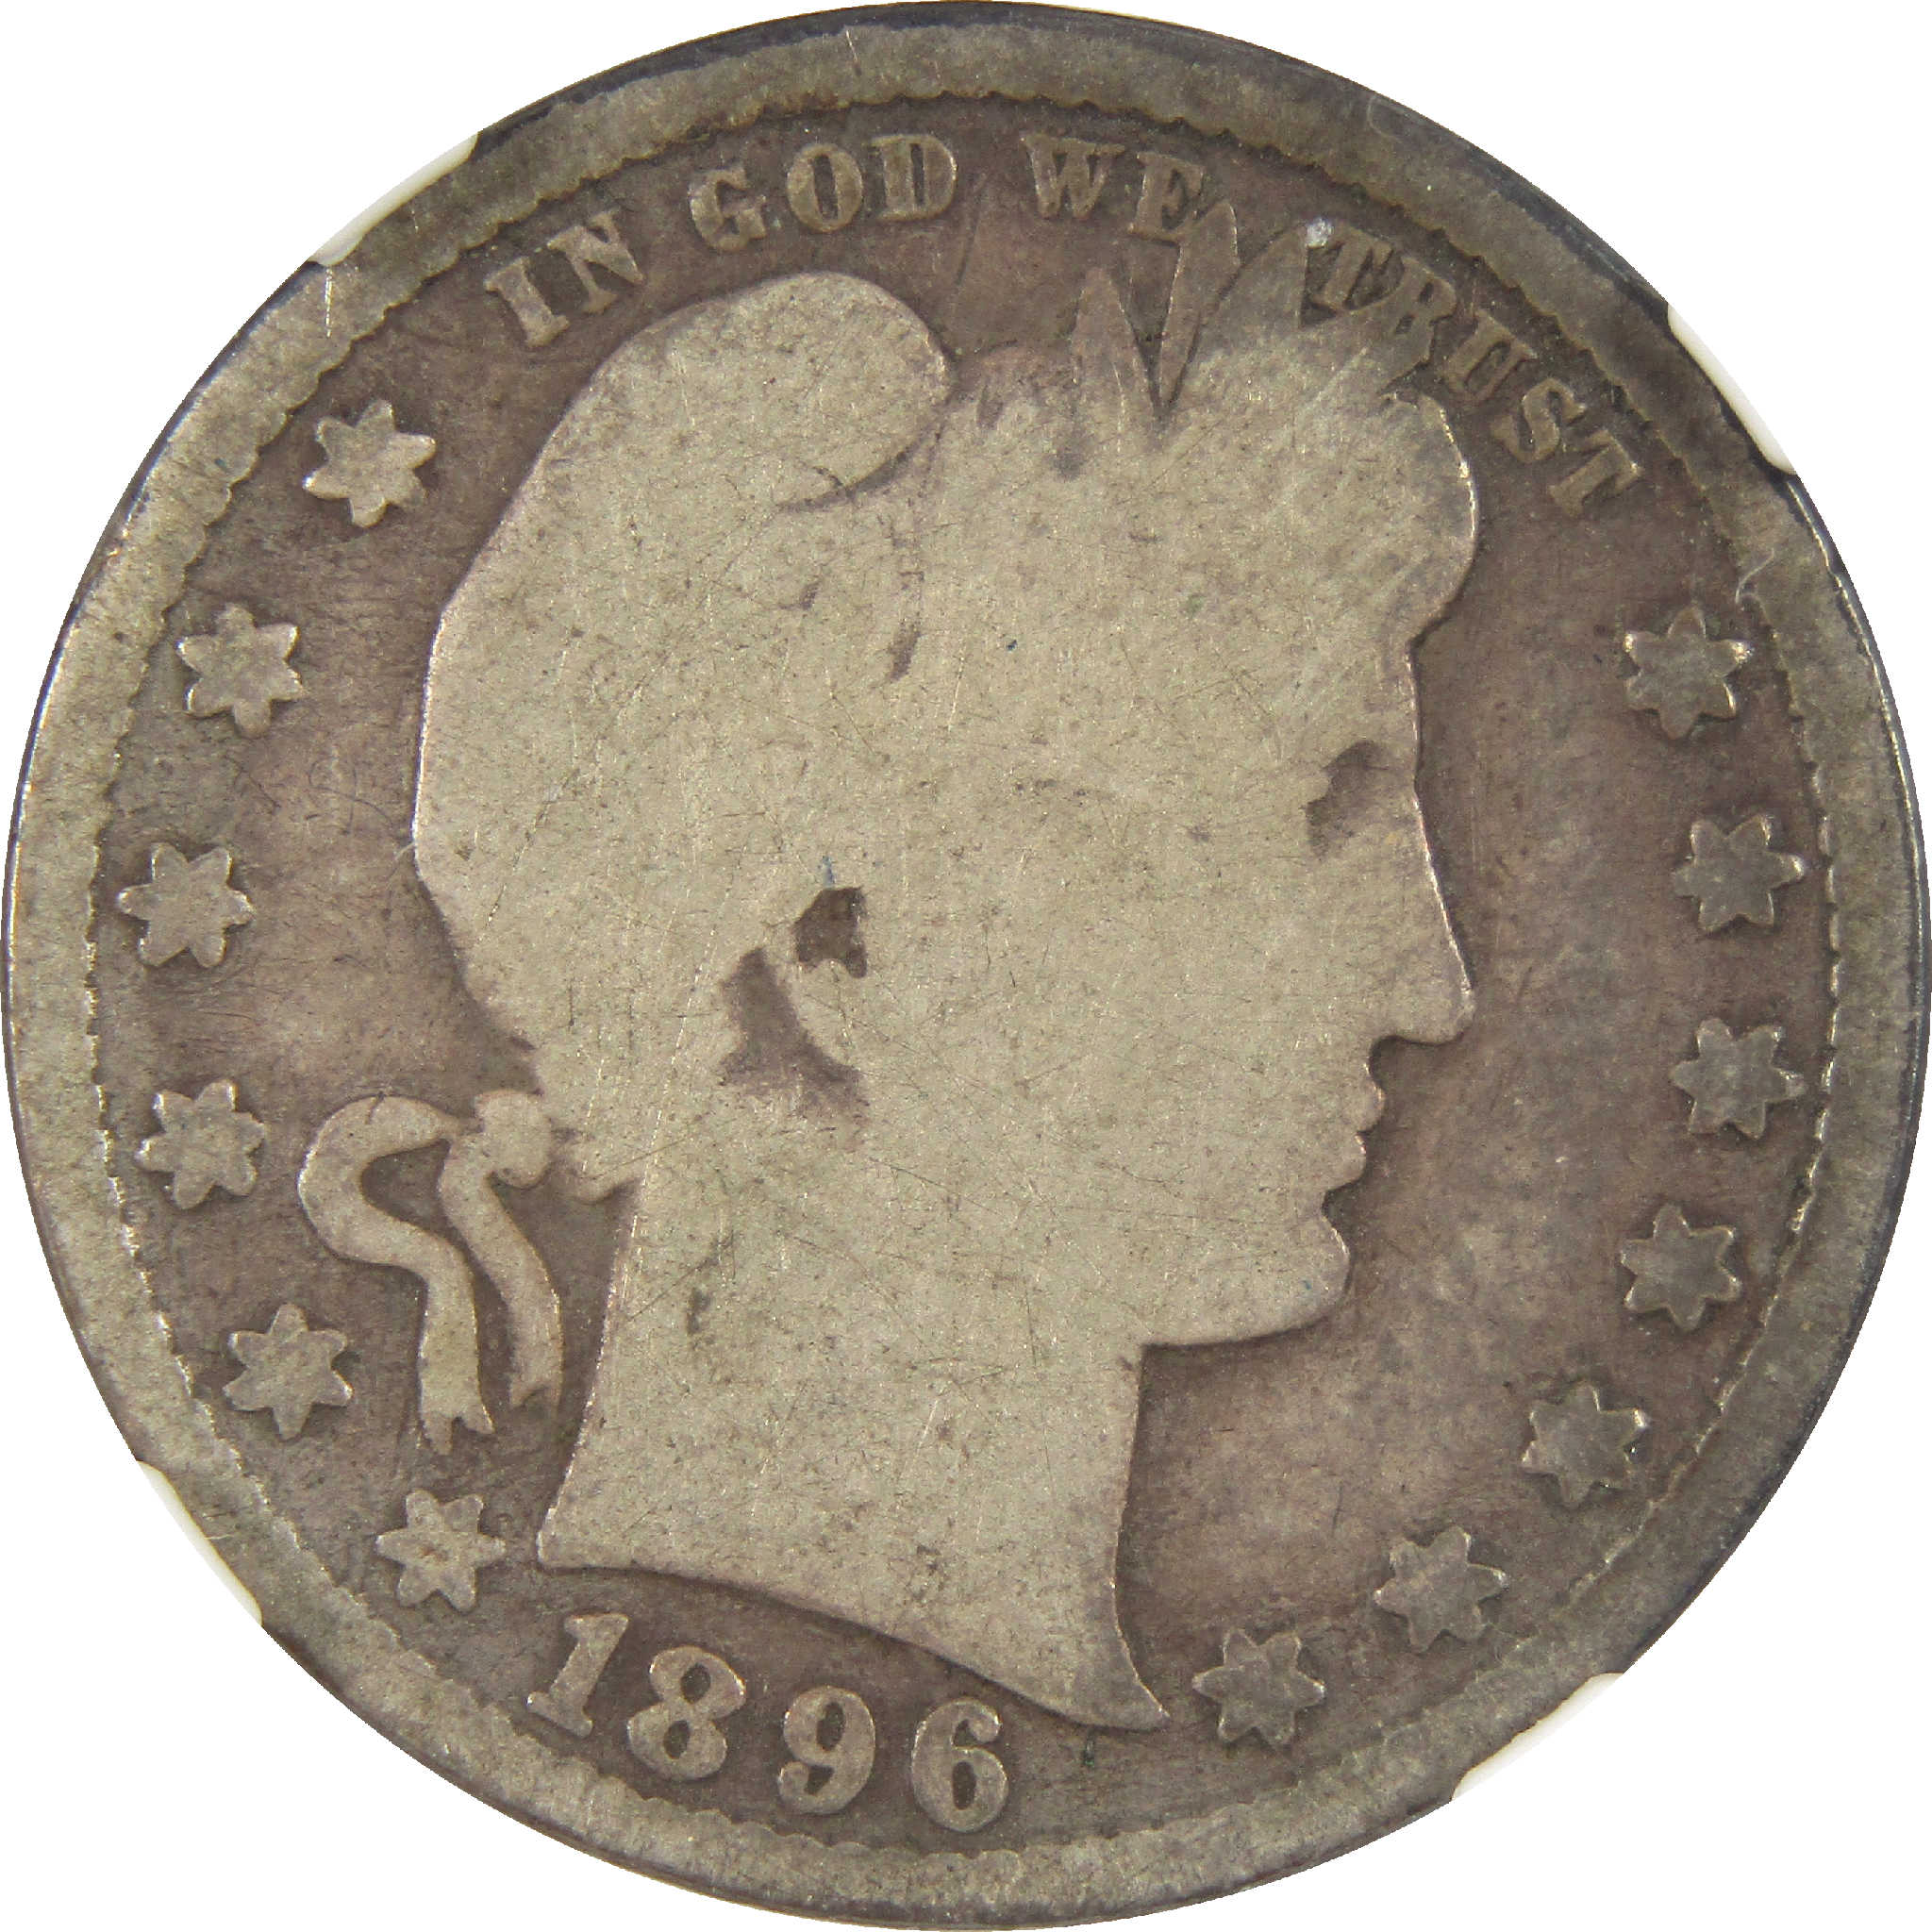 1896 S Barber Quarter G 4 NGC Silver 25c Coin SKU:I11361